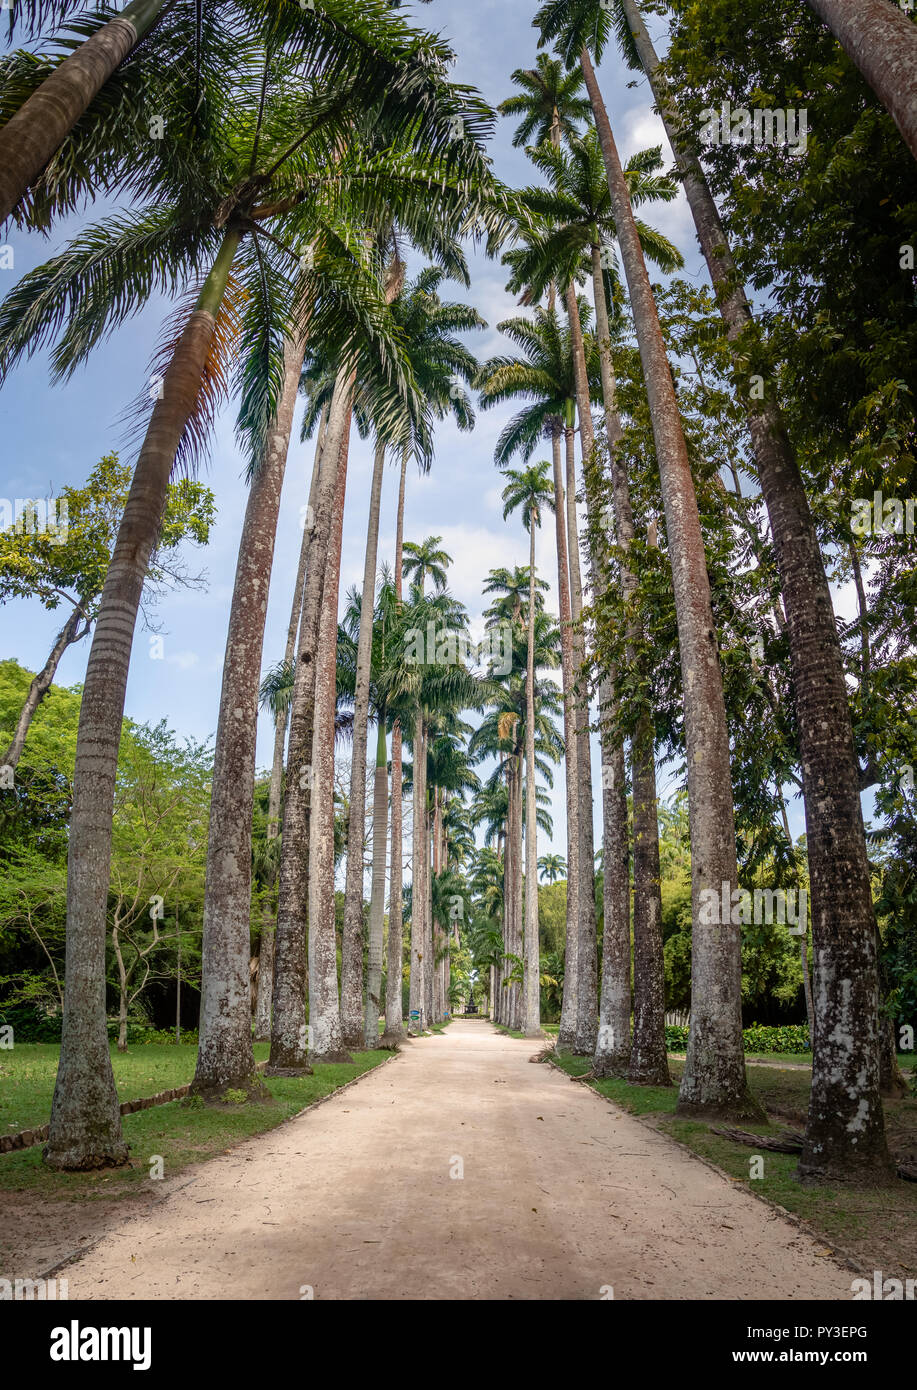 Avenue of Royal Palm Trees at Jardim Botanico Botanical Garden - Rio de Janeiro, Brazil Stock Photo